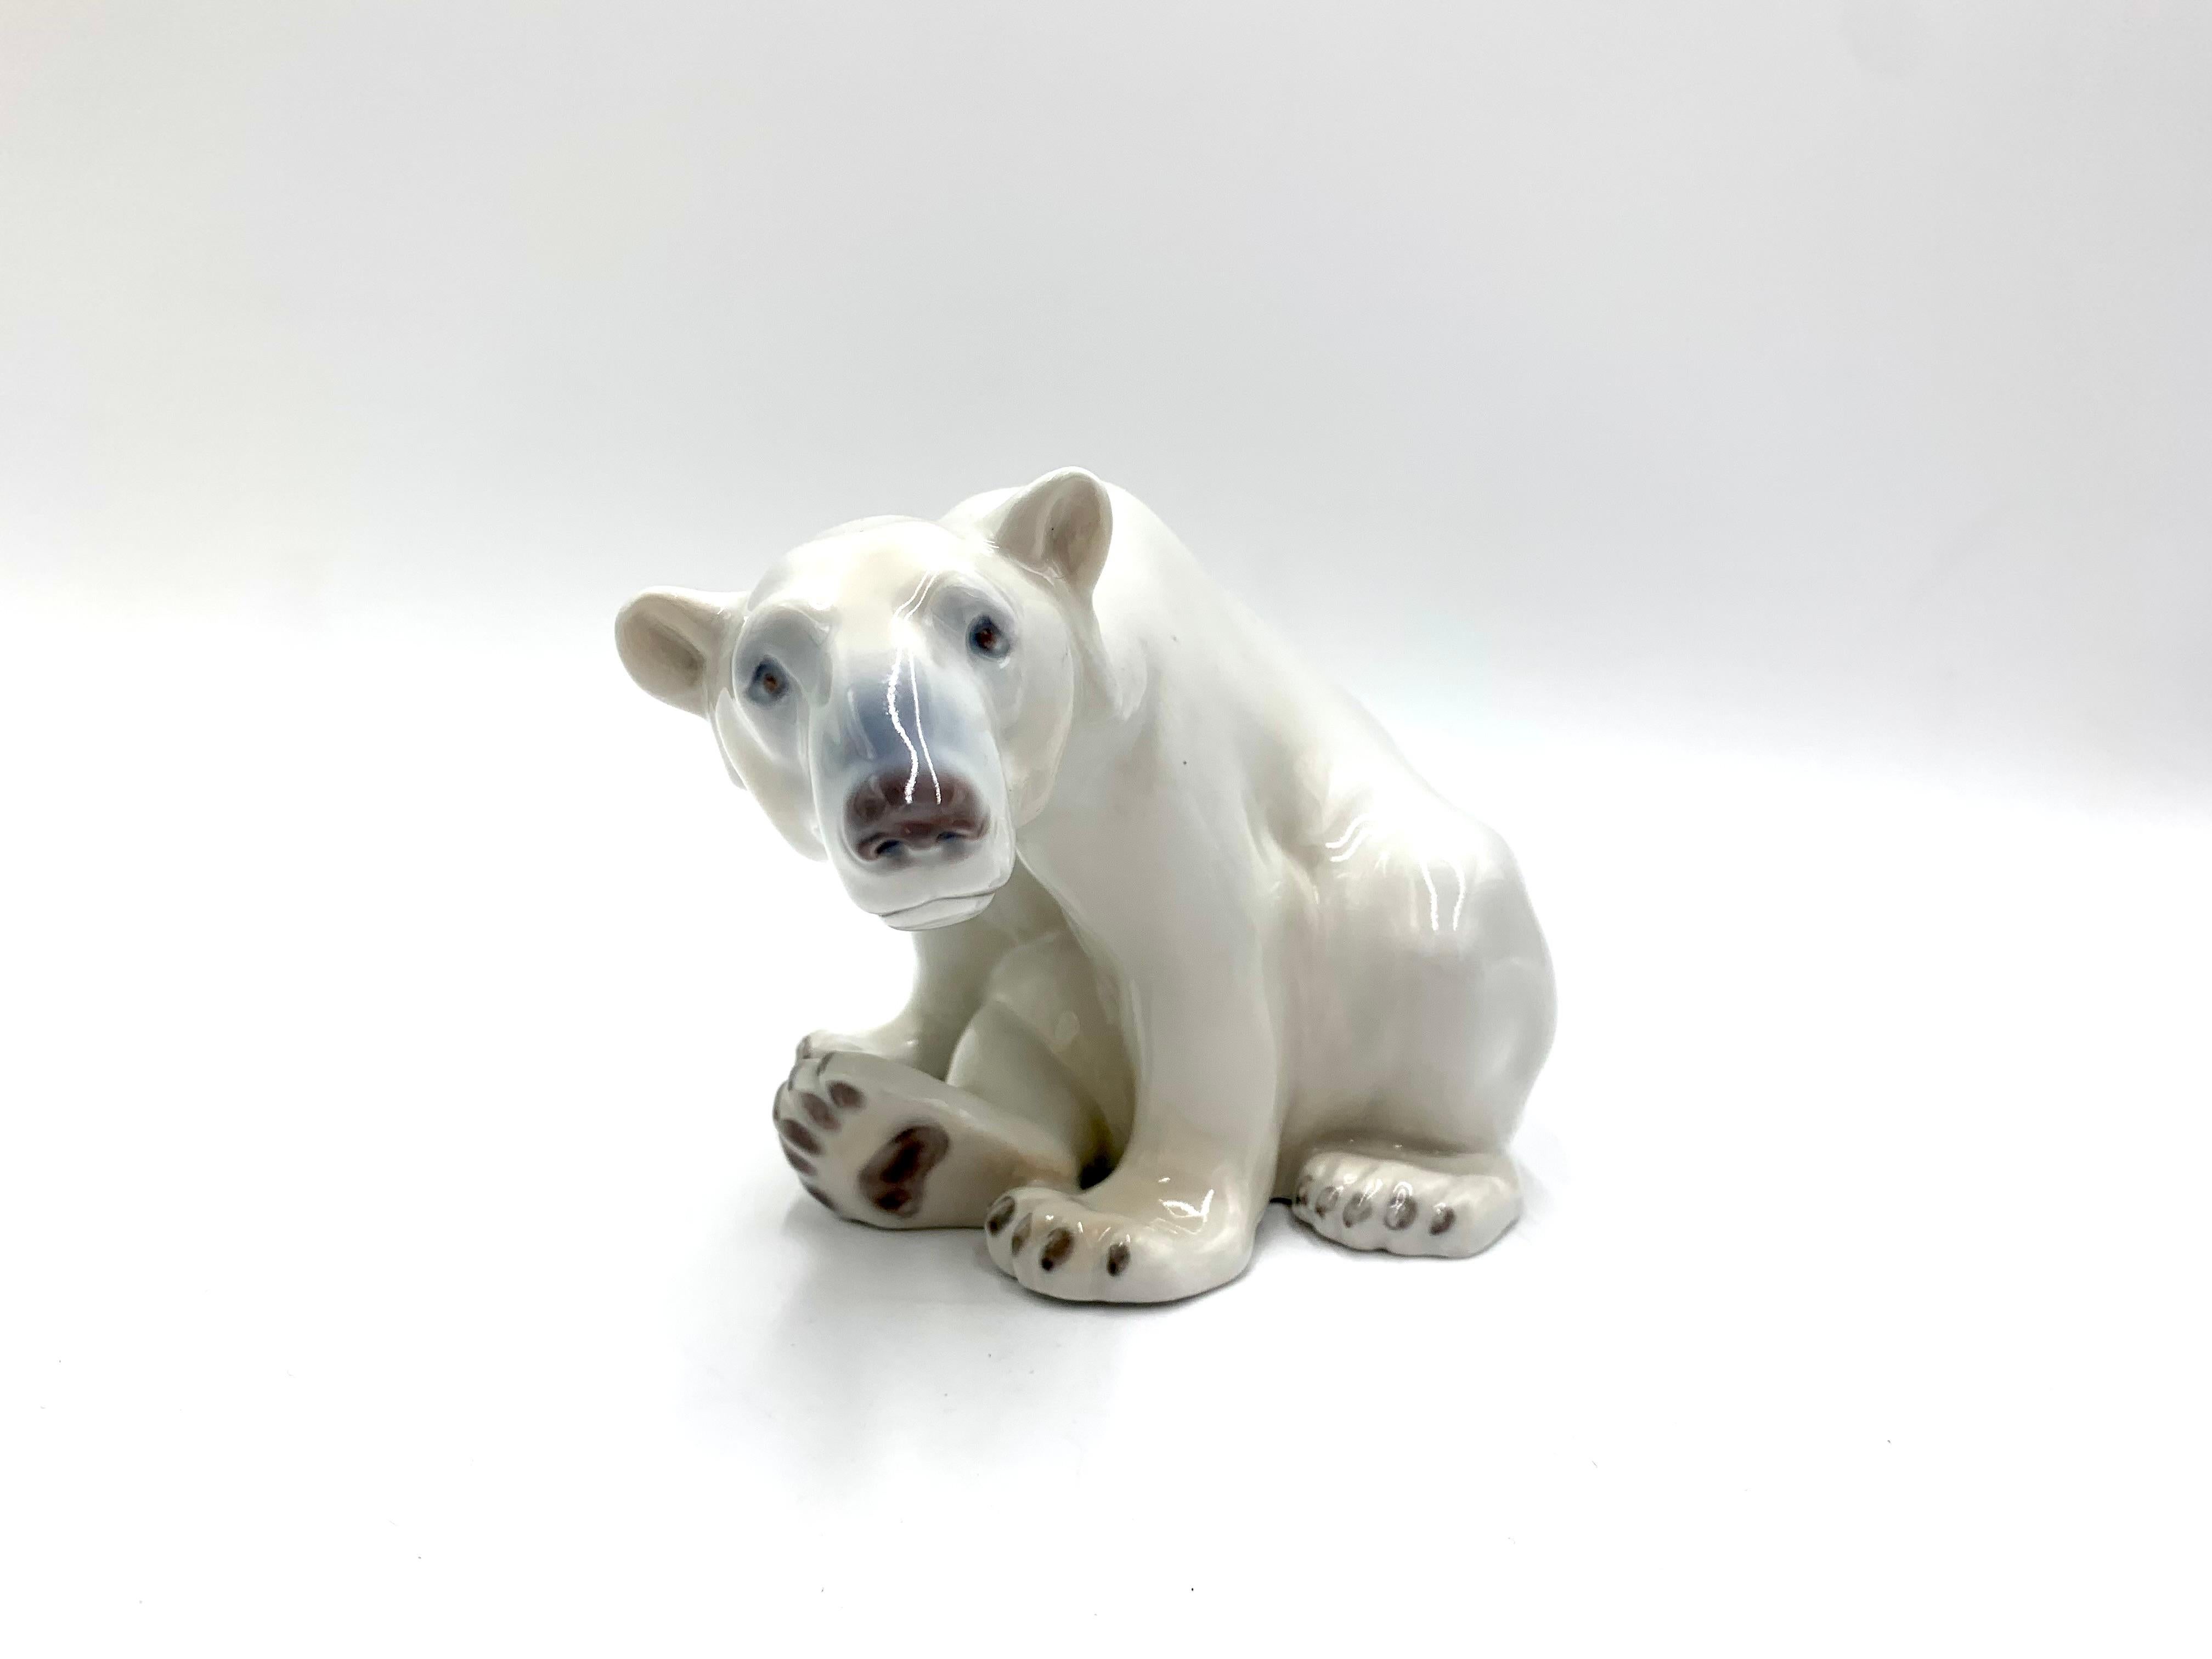 Danish Porcelain Figurine of a Polar Bear, Bing & Grondahl, Denmark, 1970s